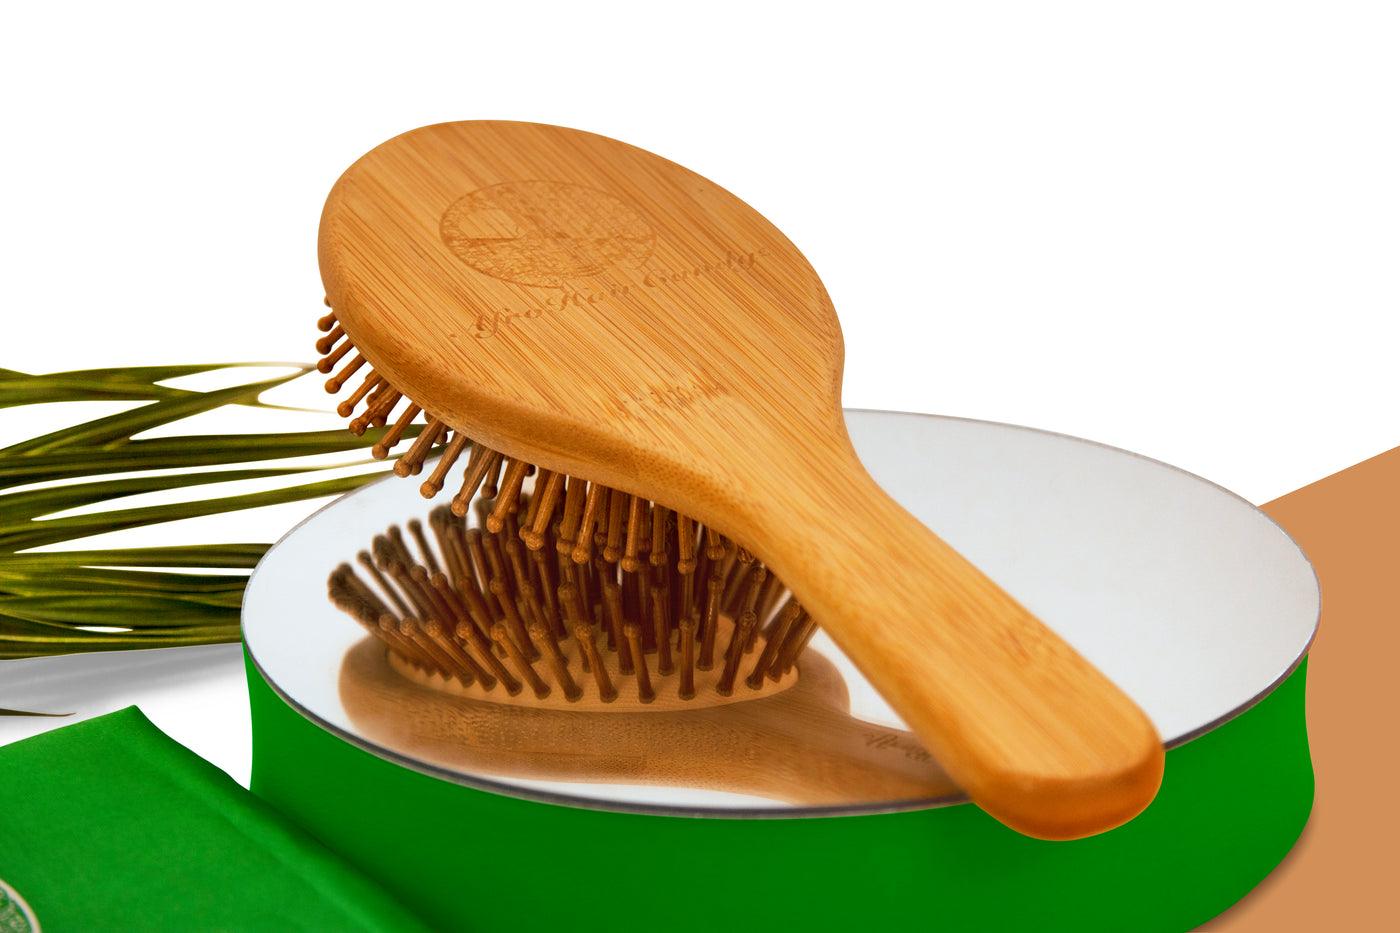 Bamboo Oval Hair Brush